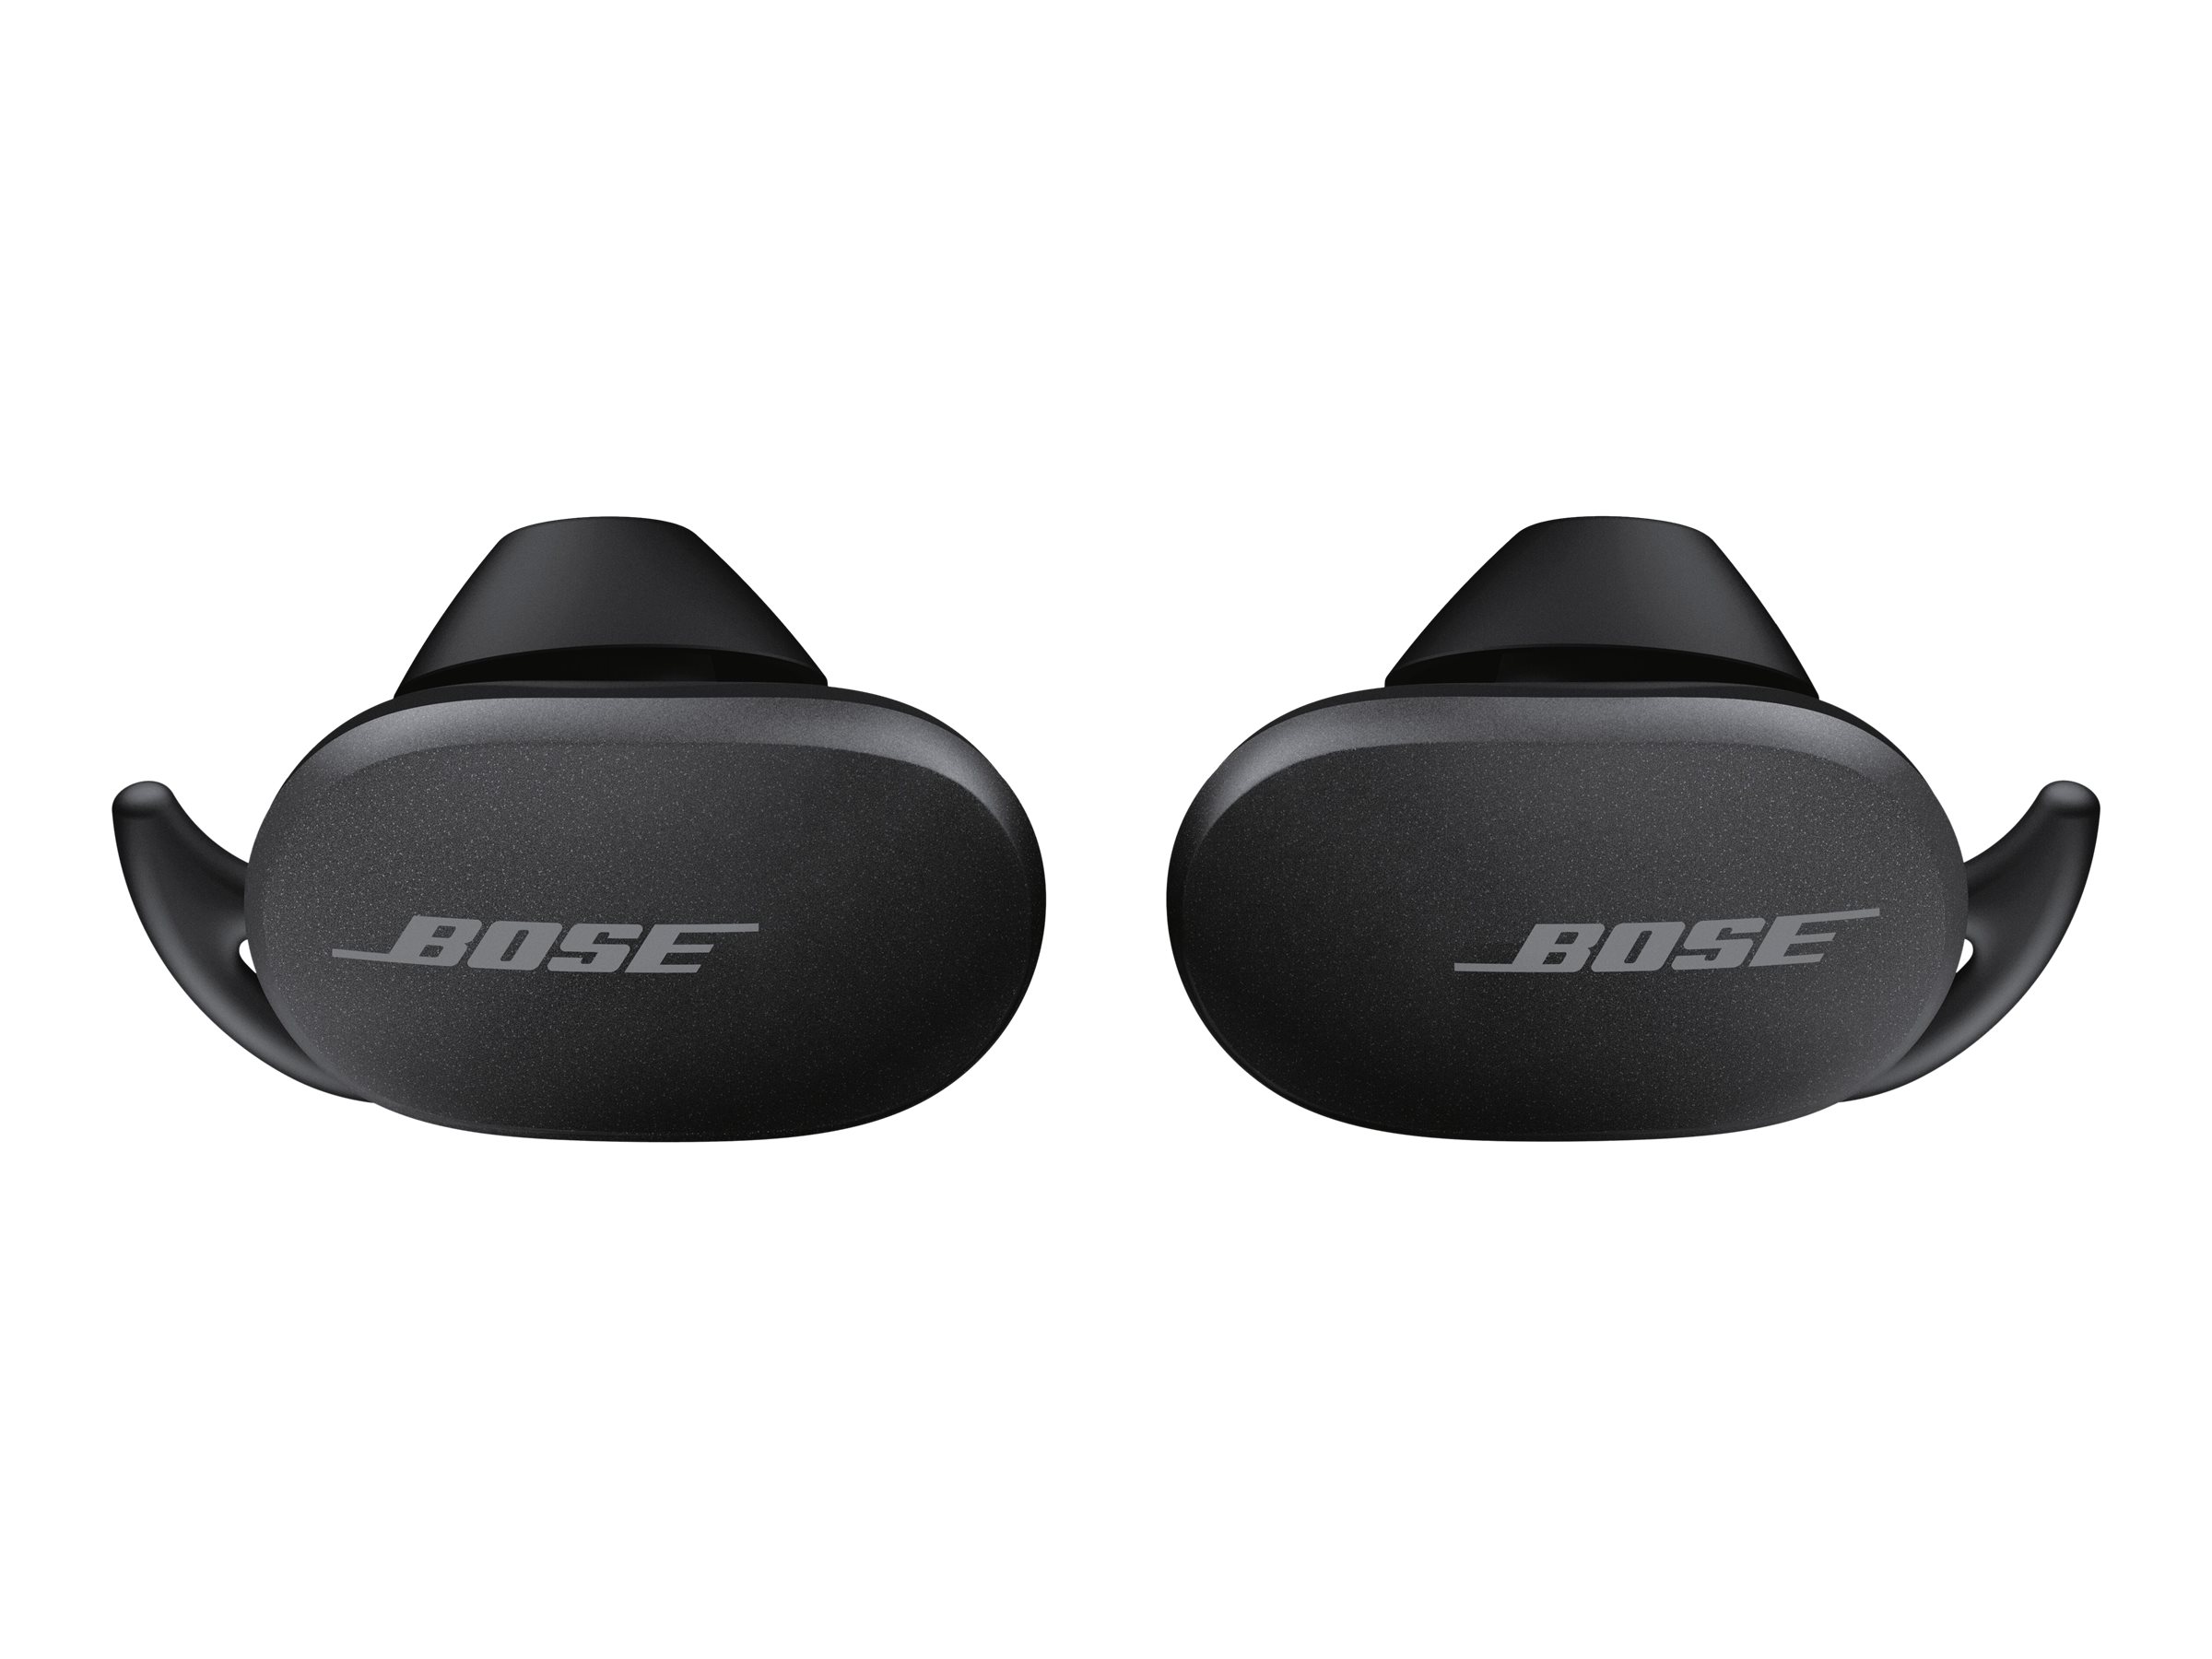 Auriculares inalámbricos - Bose SleepBuds II, USB, Bluetooth 5.0